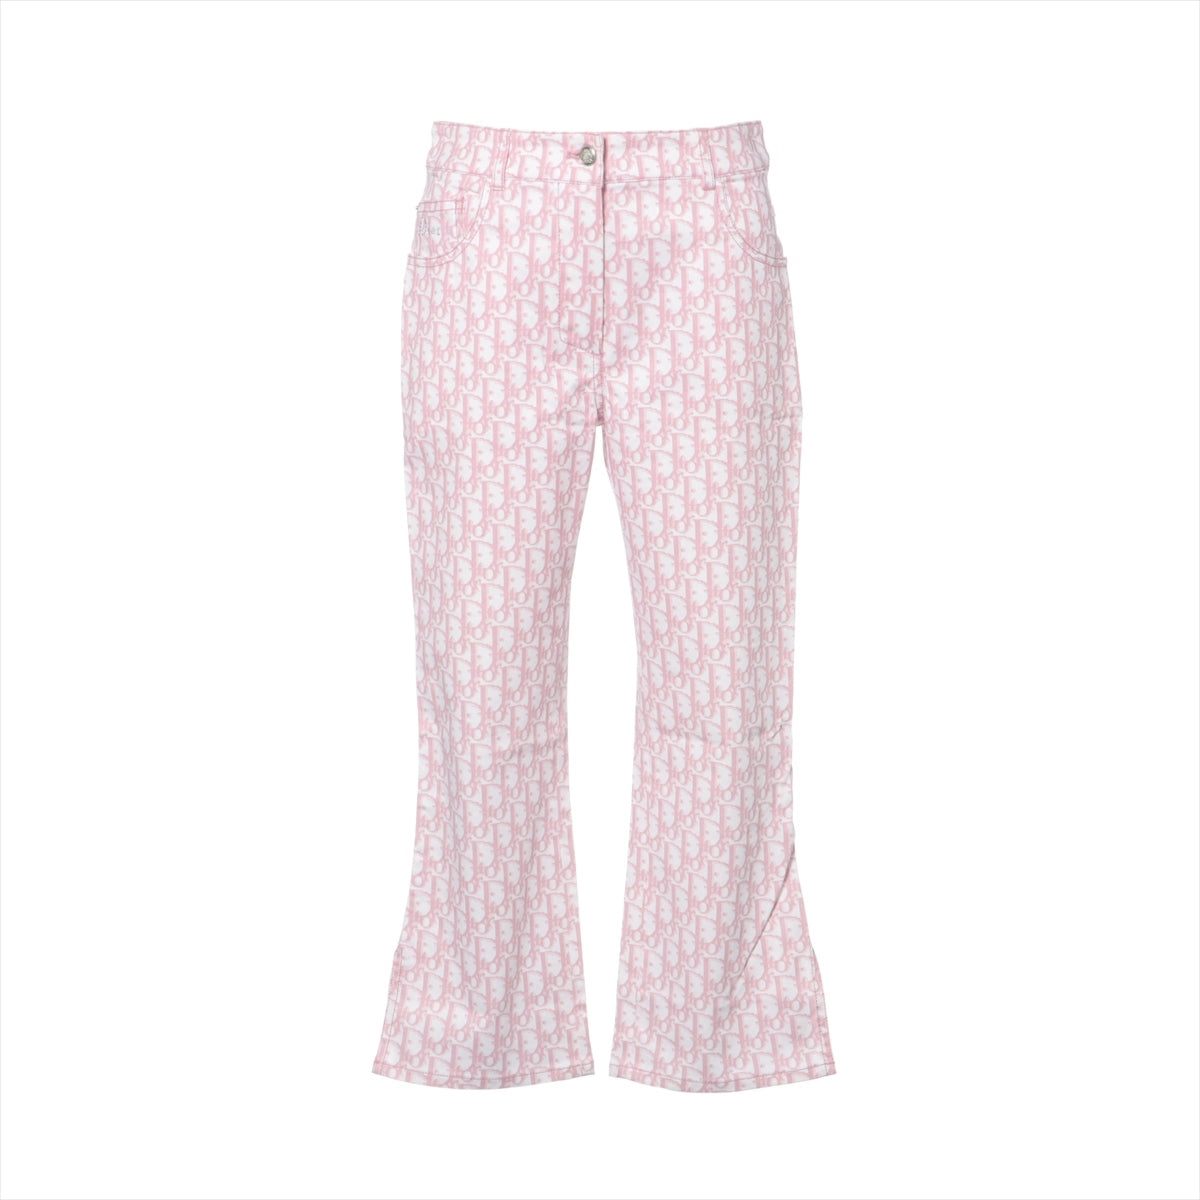 Christian Dior Trotter Cotton & Polyurethane Pants F34 Ladies' White x pink  4P12044560